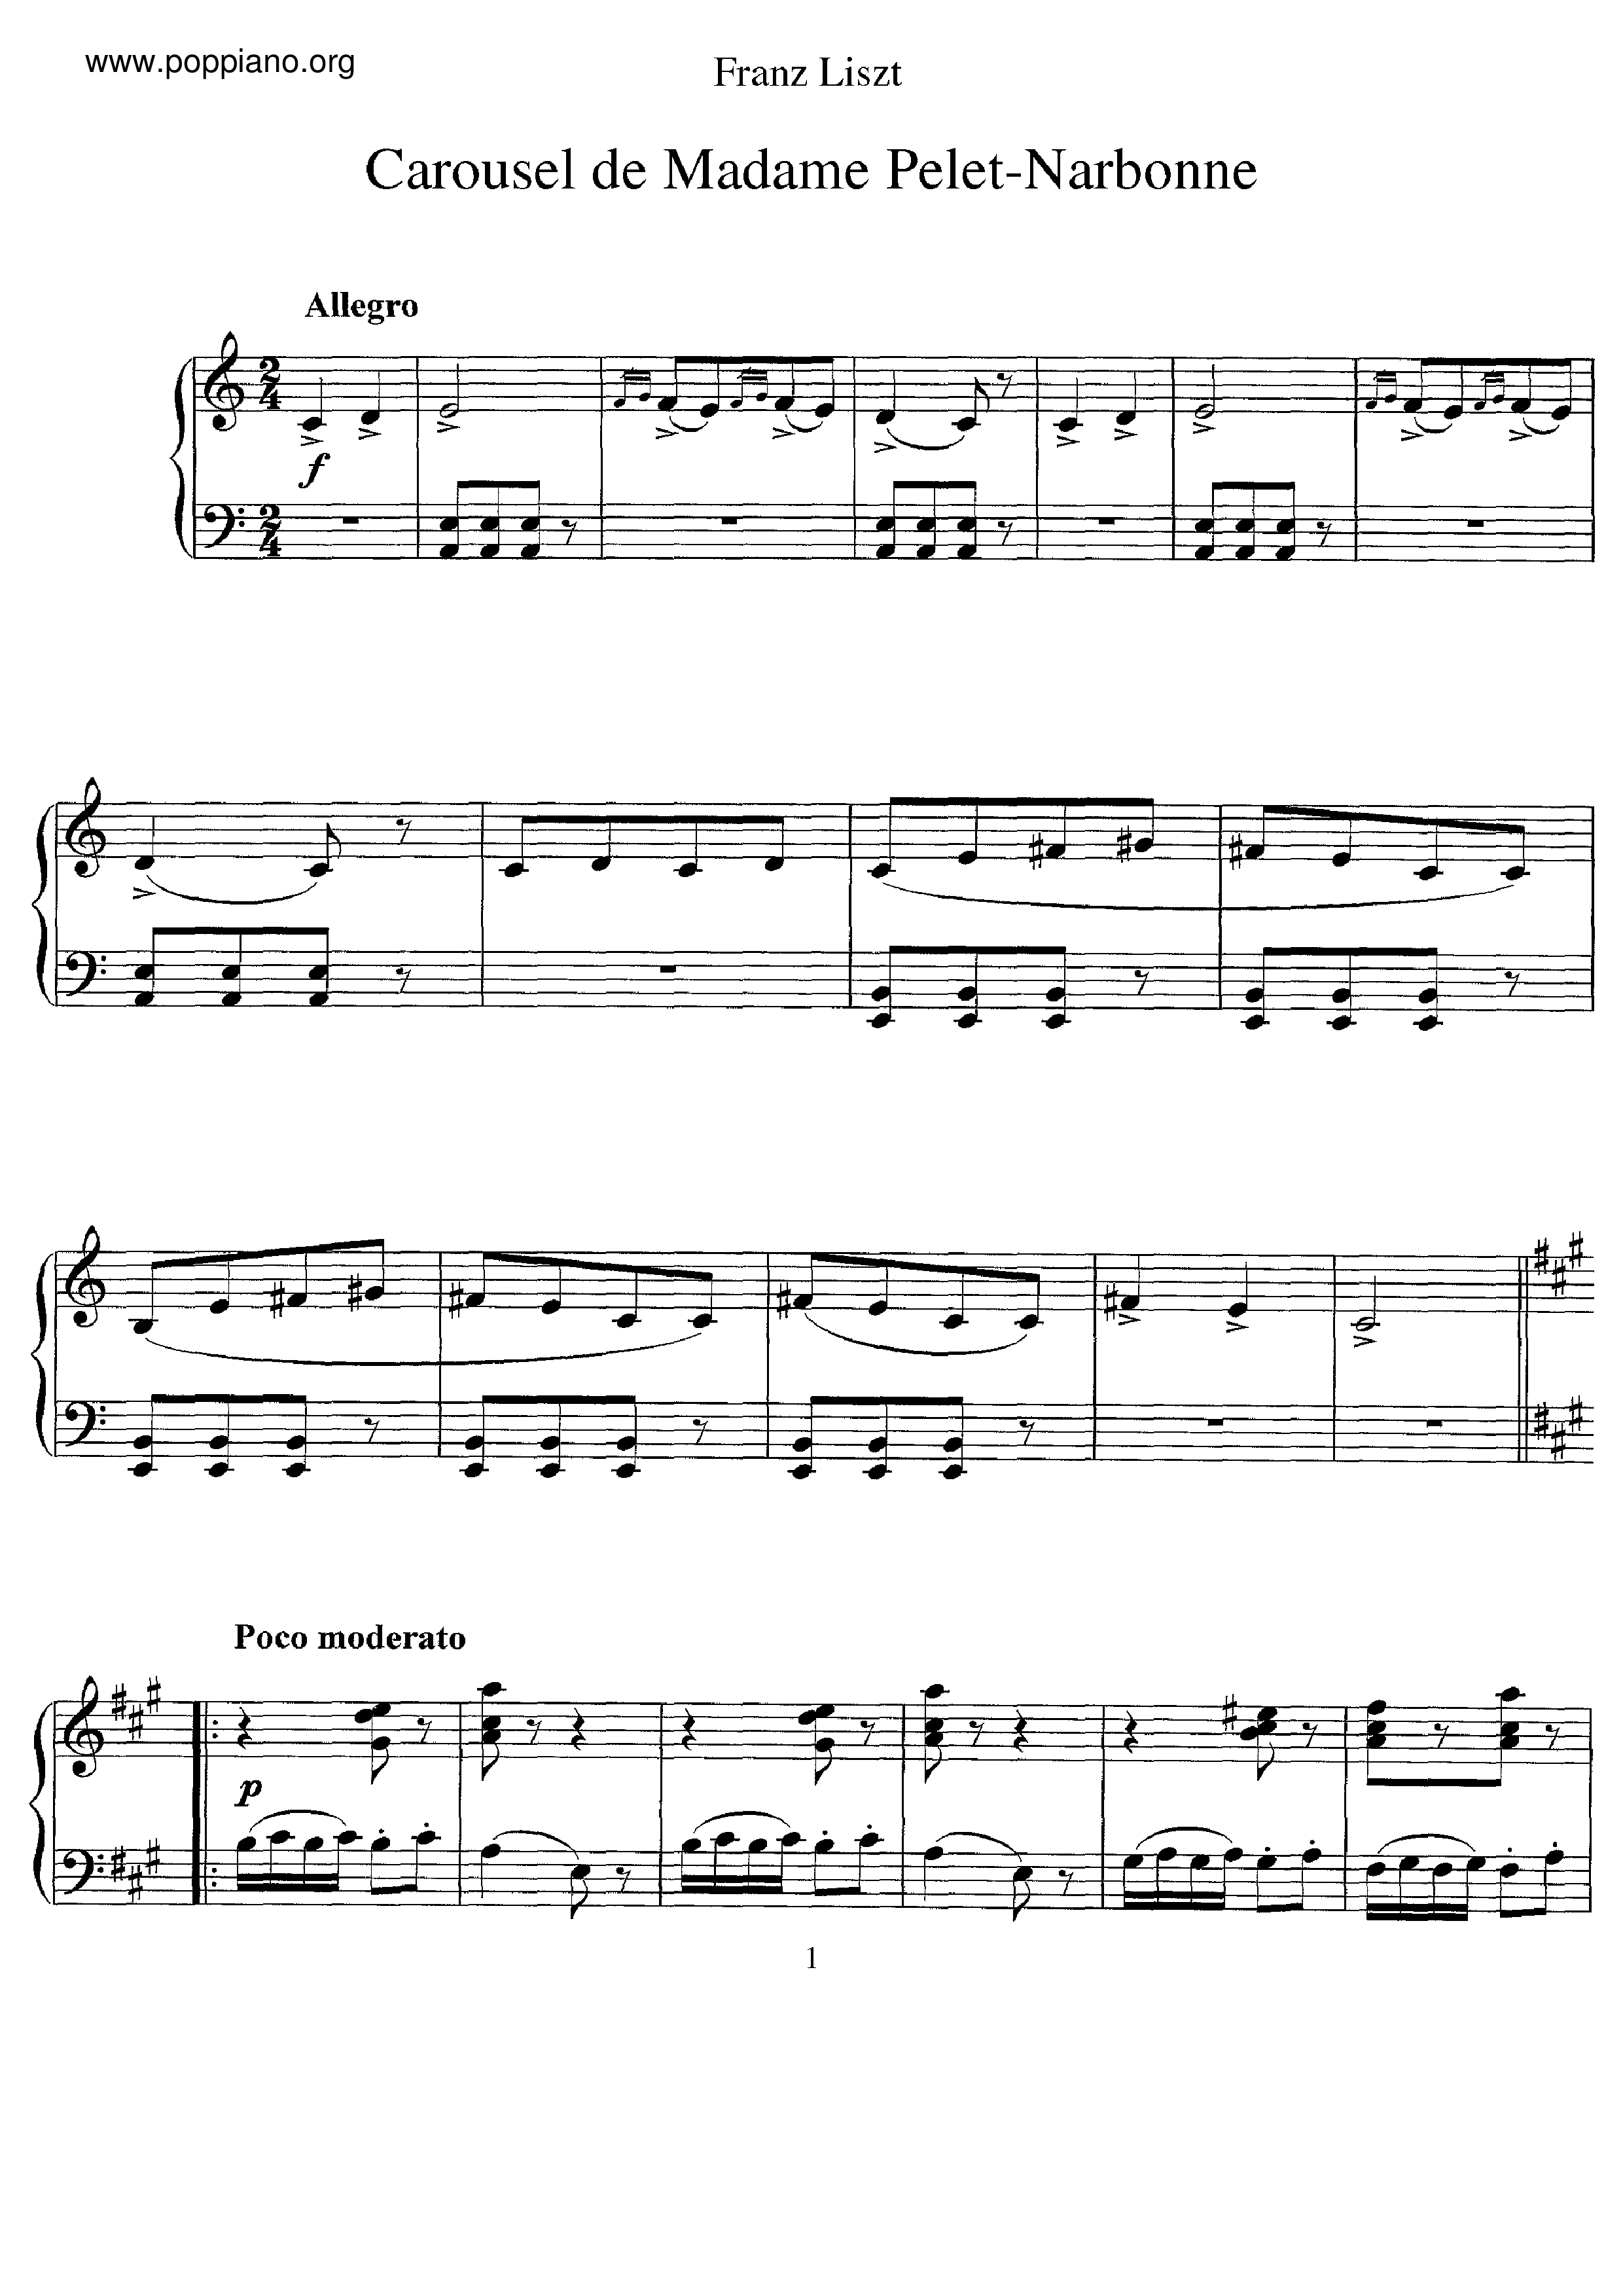 Carousel de Madame Pelet-Narbone, S.214a Score